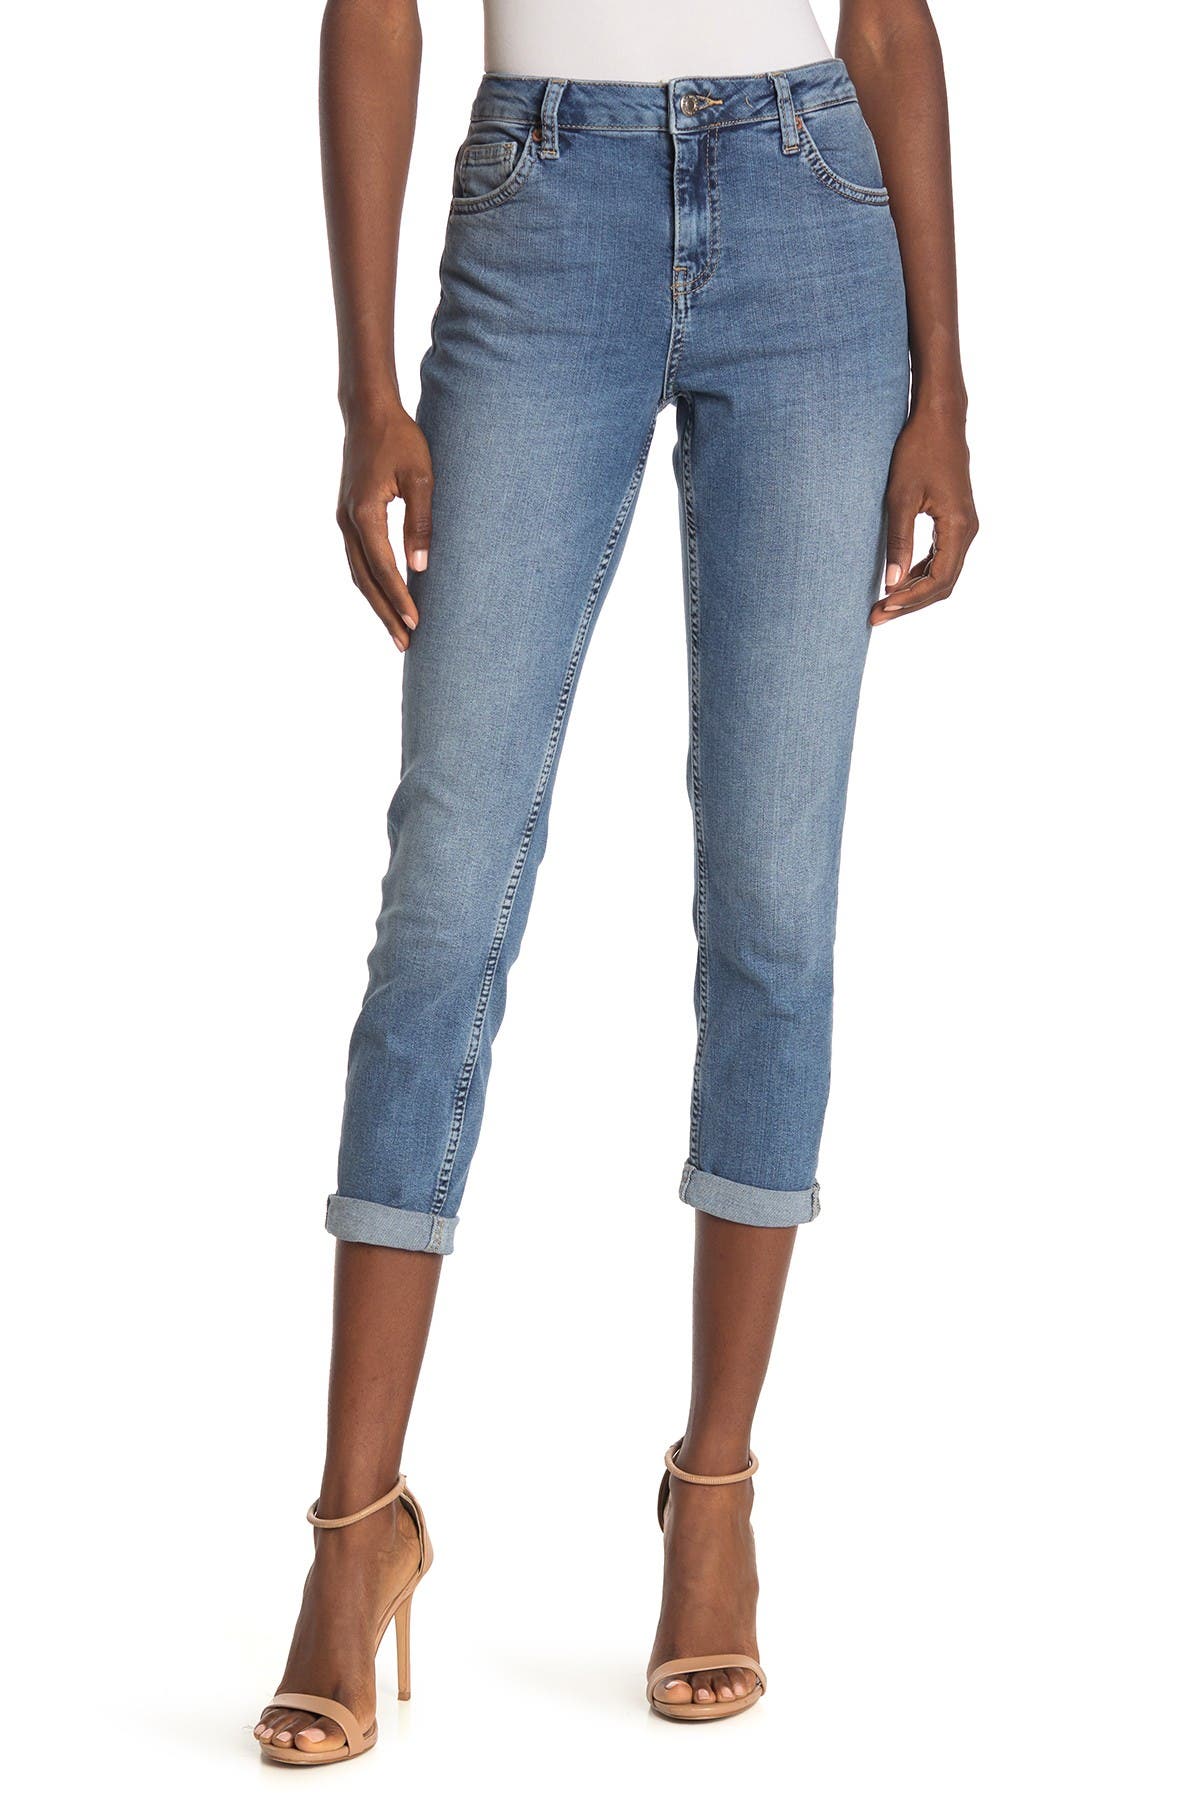 topshop jeans canada